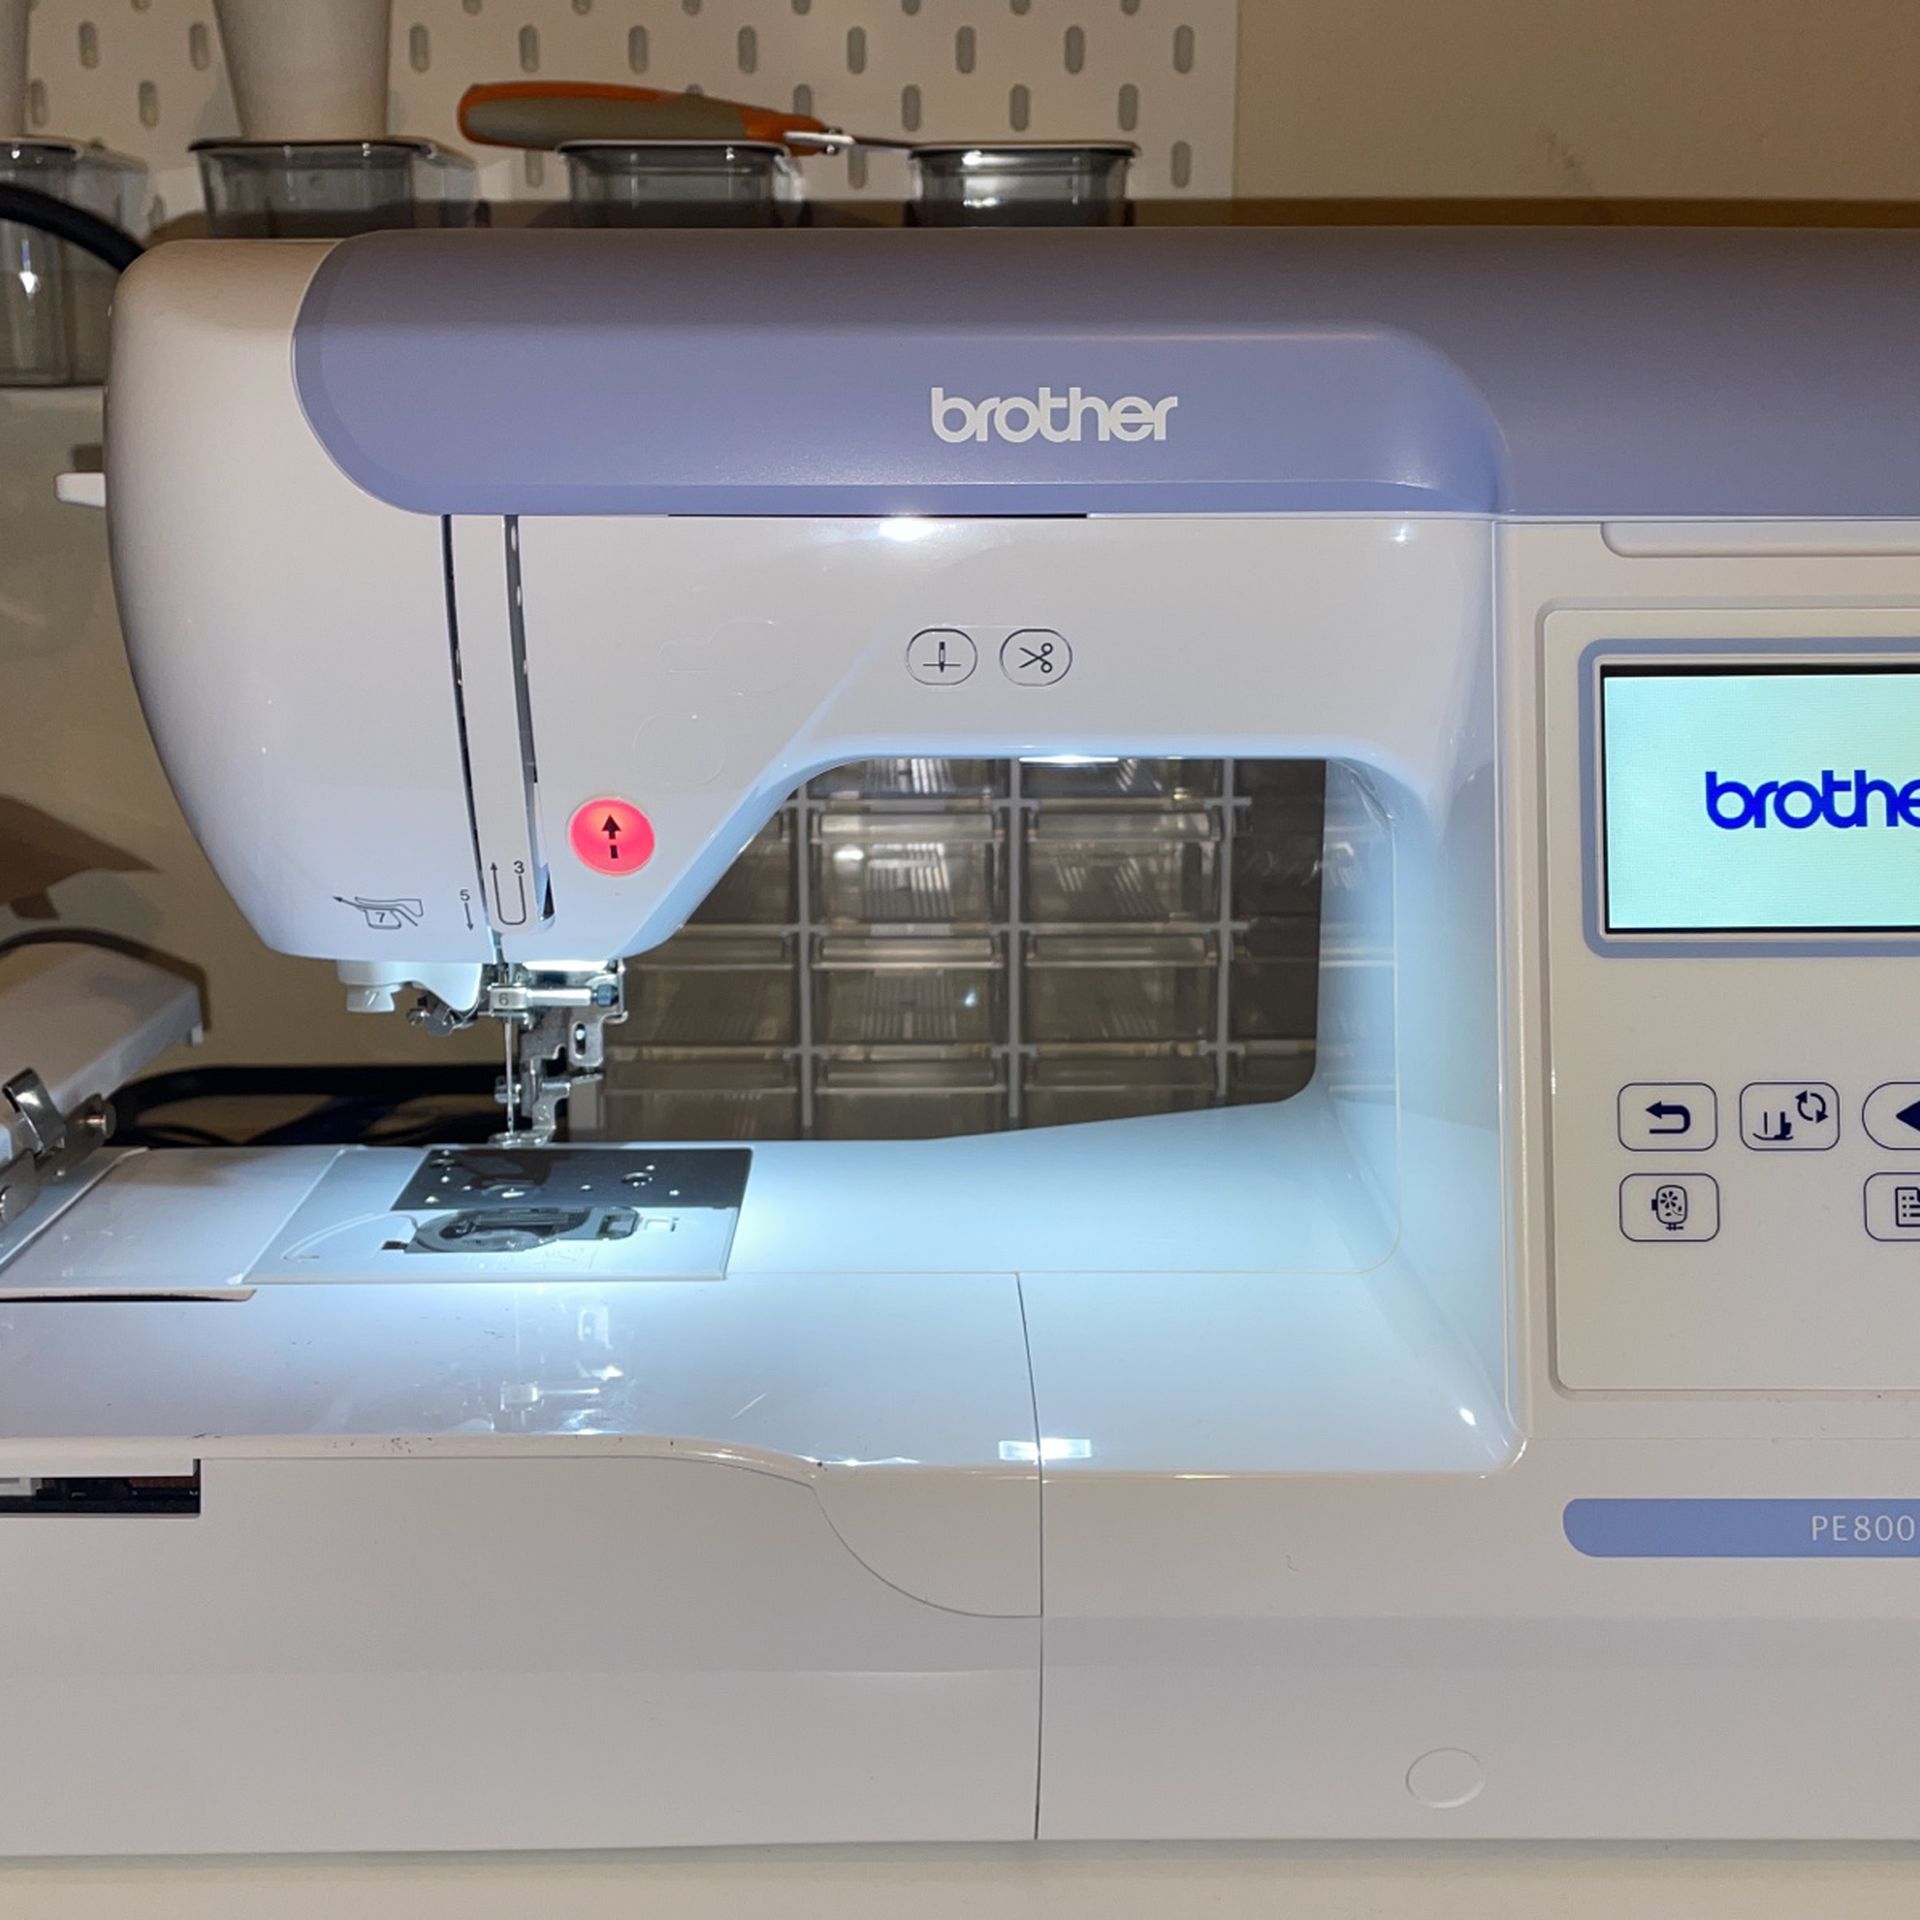 Brother PE800 Embroidery Machine Review » EMDIGITIZER